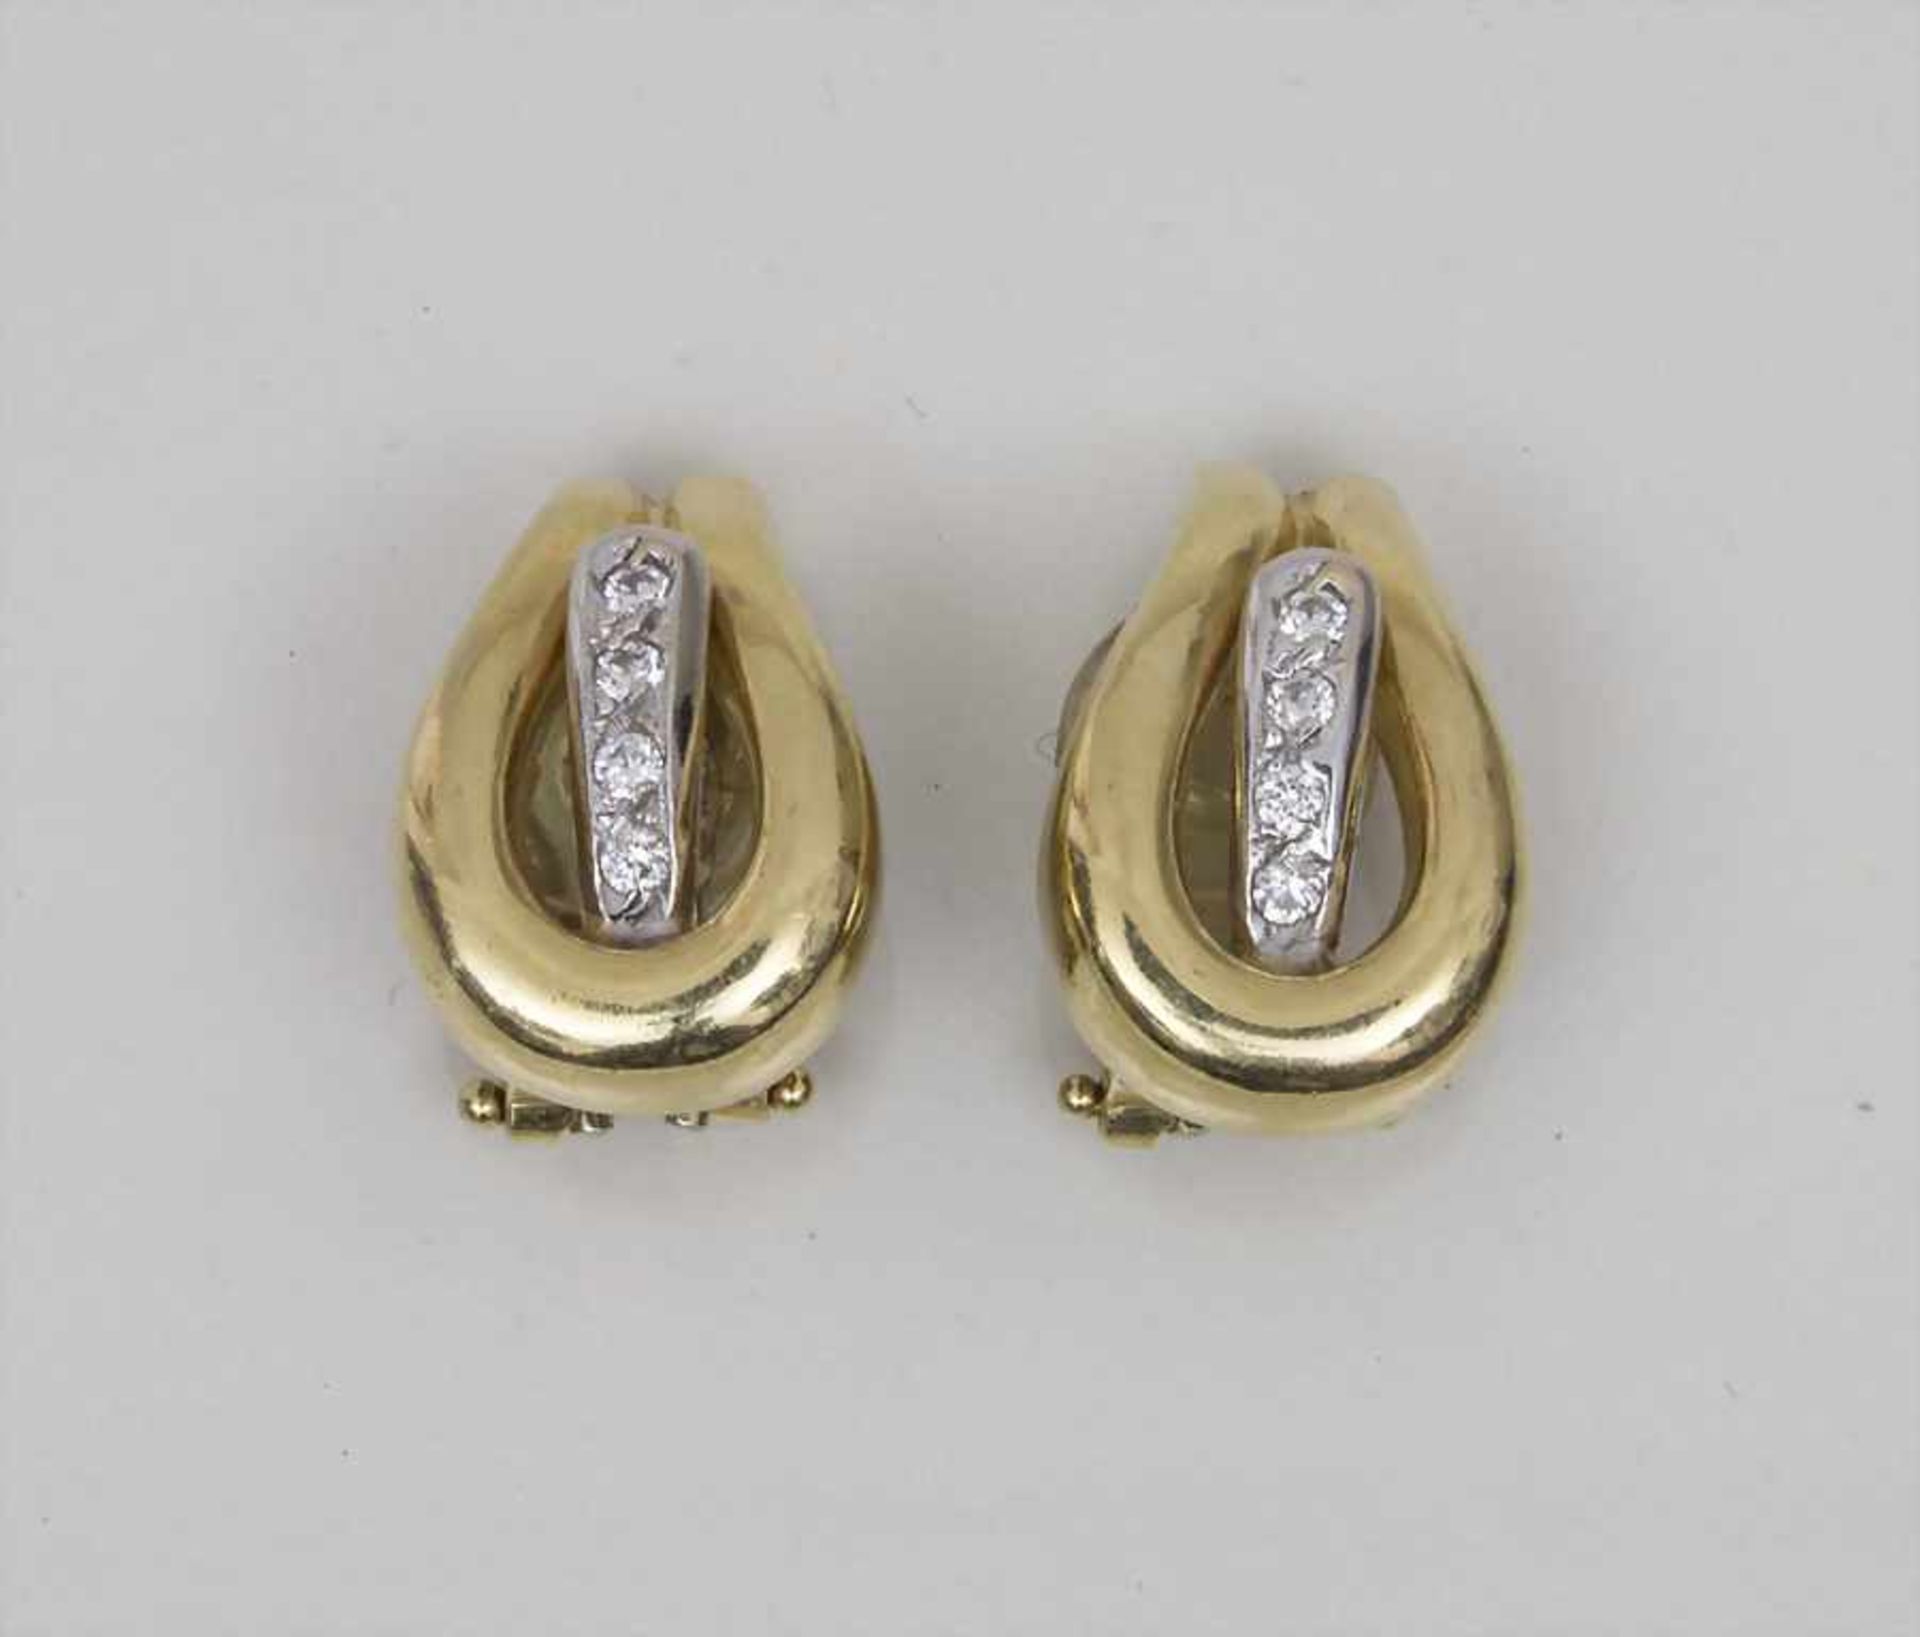 Paar Ohrclips / A pair of earclips, Italien Material: Gelbgold 750/000 18 Kt gepunzt, weiße